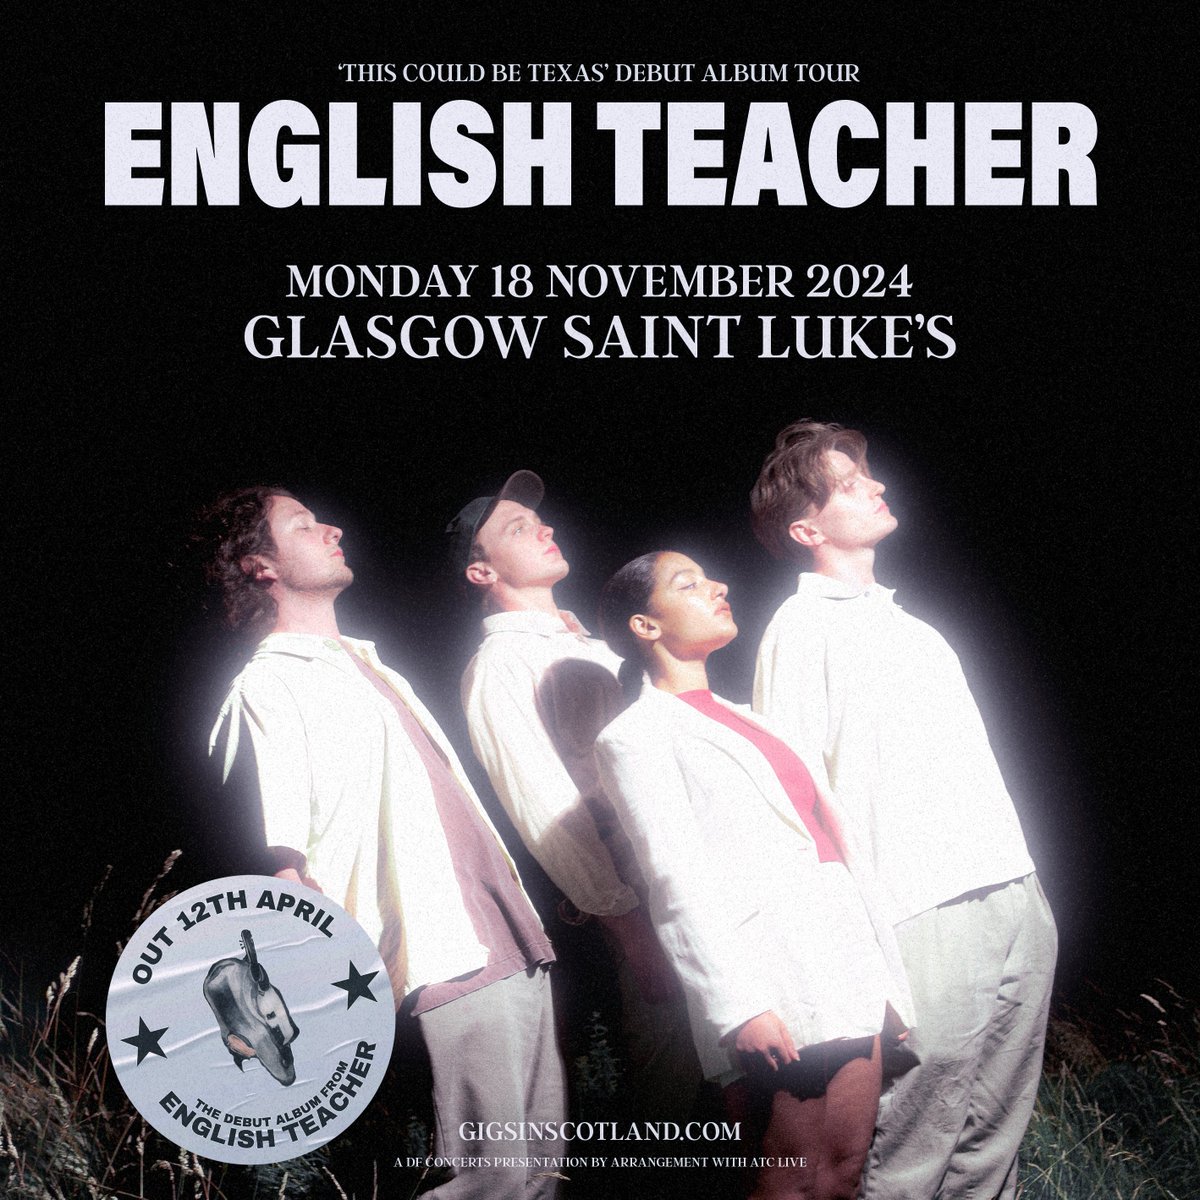 ON SALE NOW 🎟️» @Englishteac_her 'This Could Be Texas' Debut Album Tour @stlukesglasgow | 18th November 2024 TICKETS ⇾ gigss.co/english-teacher